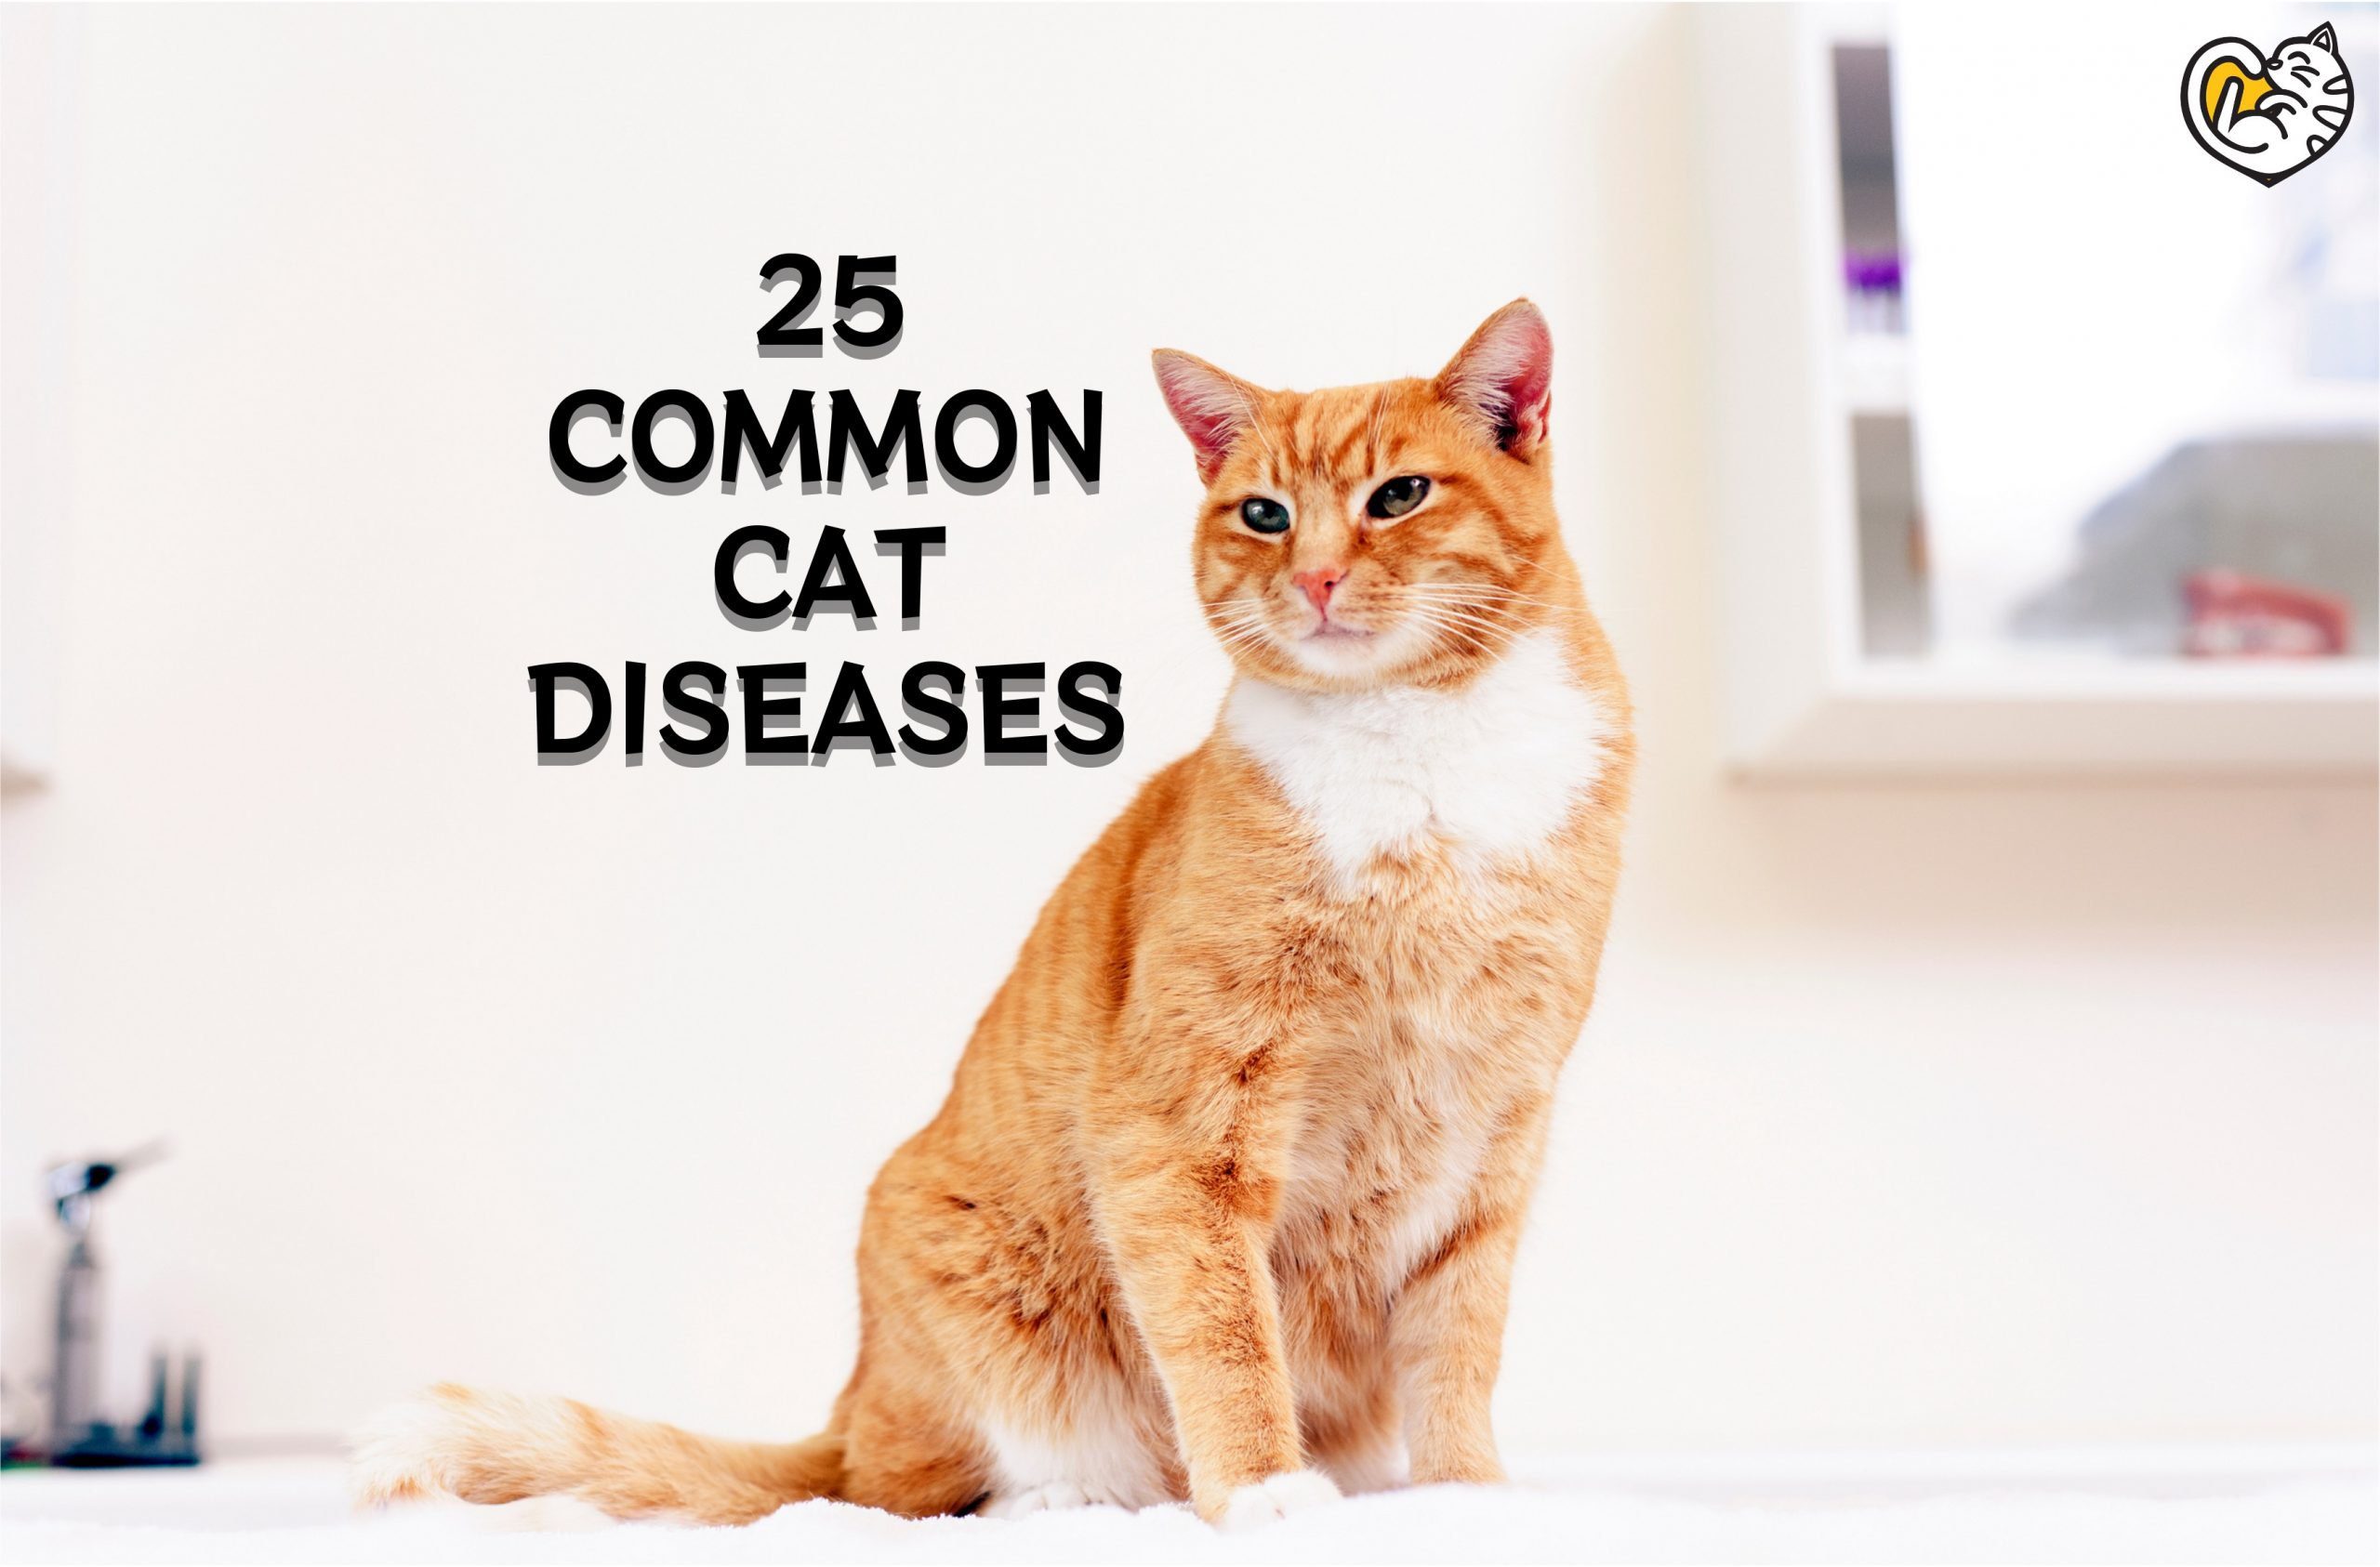 25 COMMON CAT DISEASES